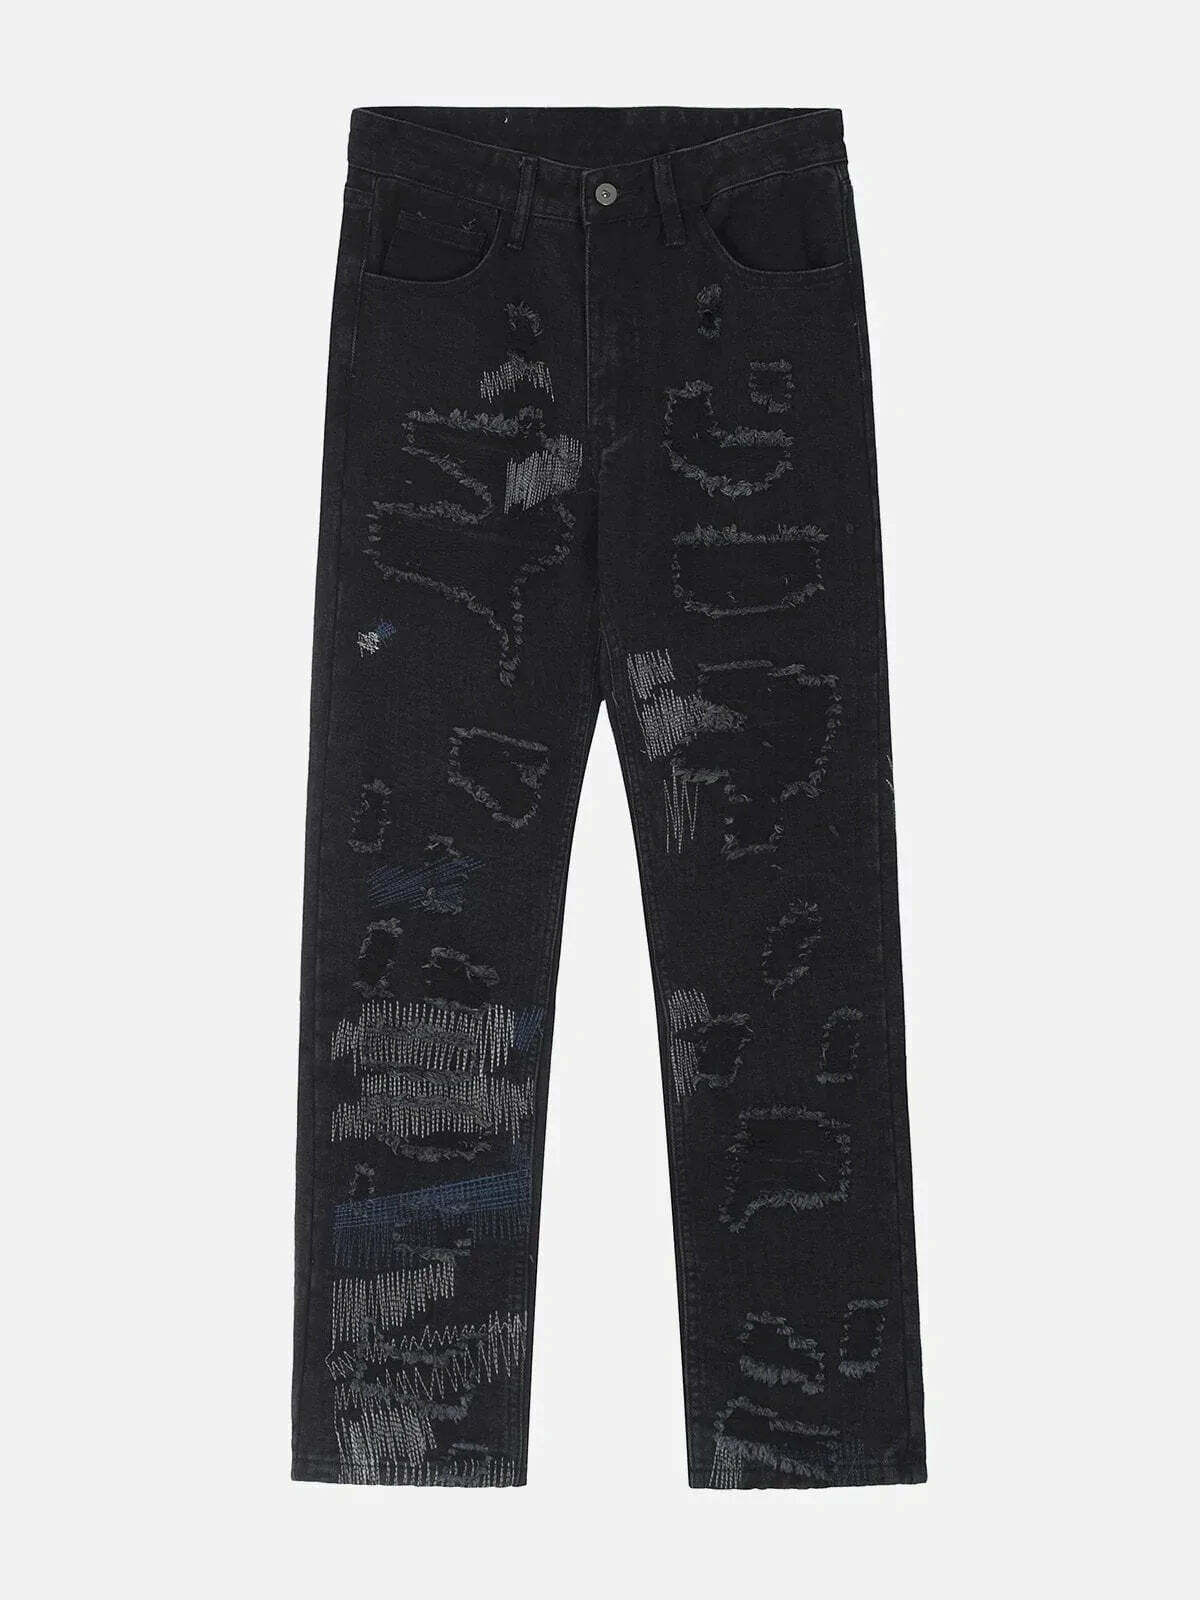 revolutionary patchwork embroidered jeans edgy & irregular design 4345